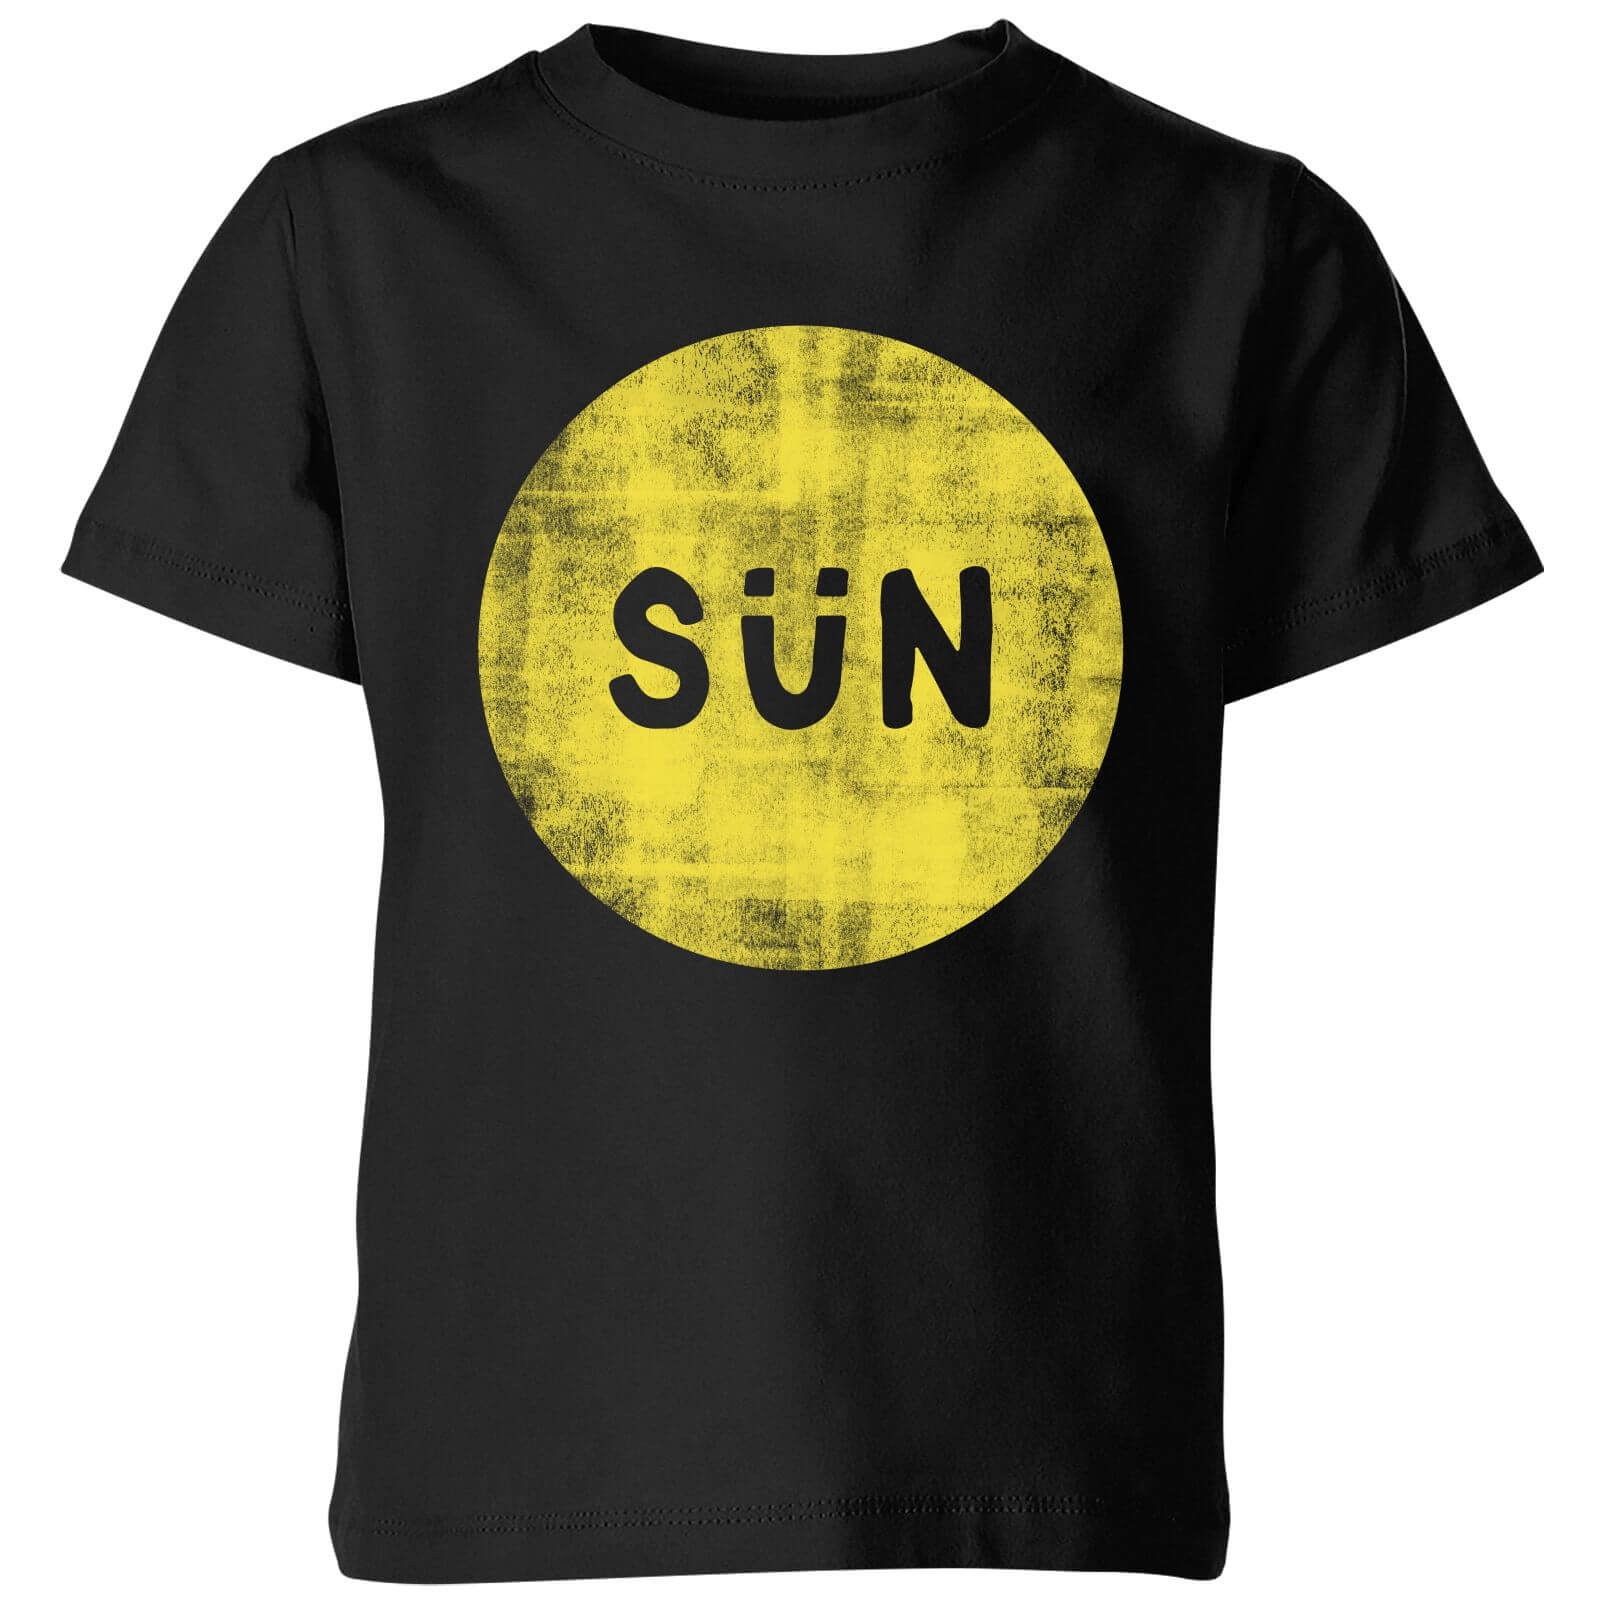 My Little Rascal Sun Kids' T-Shirt - Black - 3-4 Years - Black